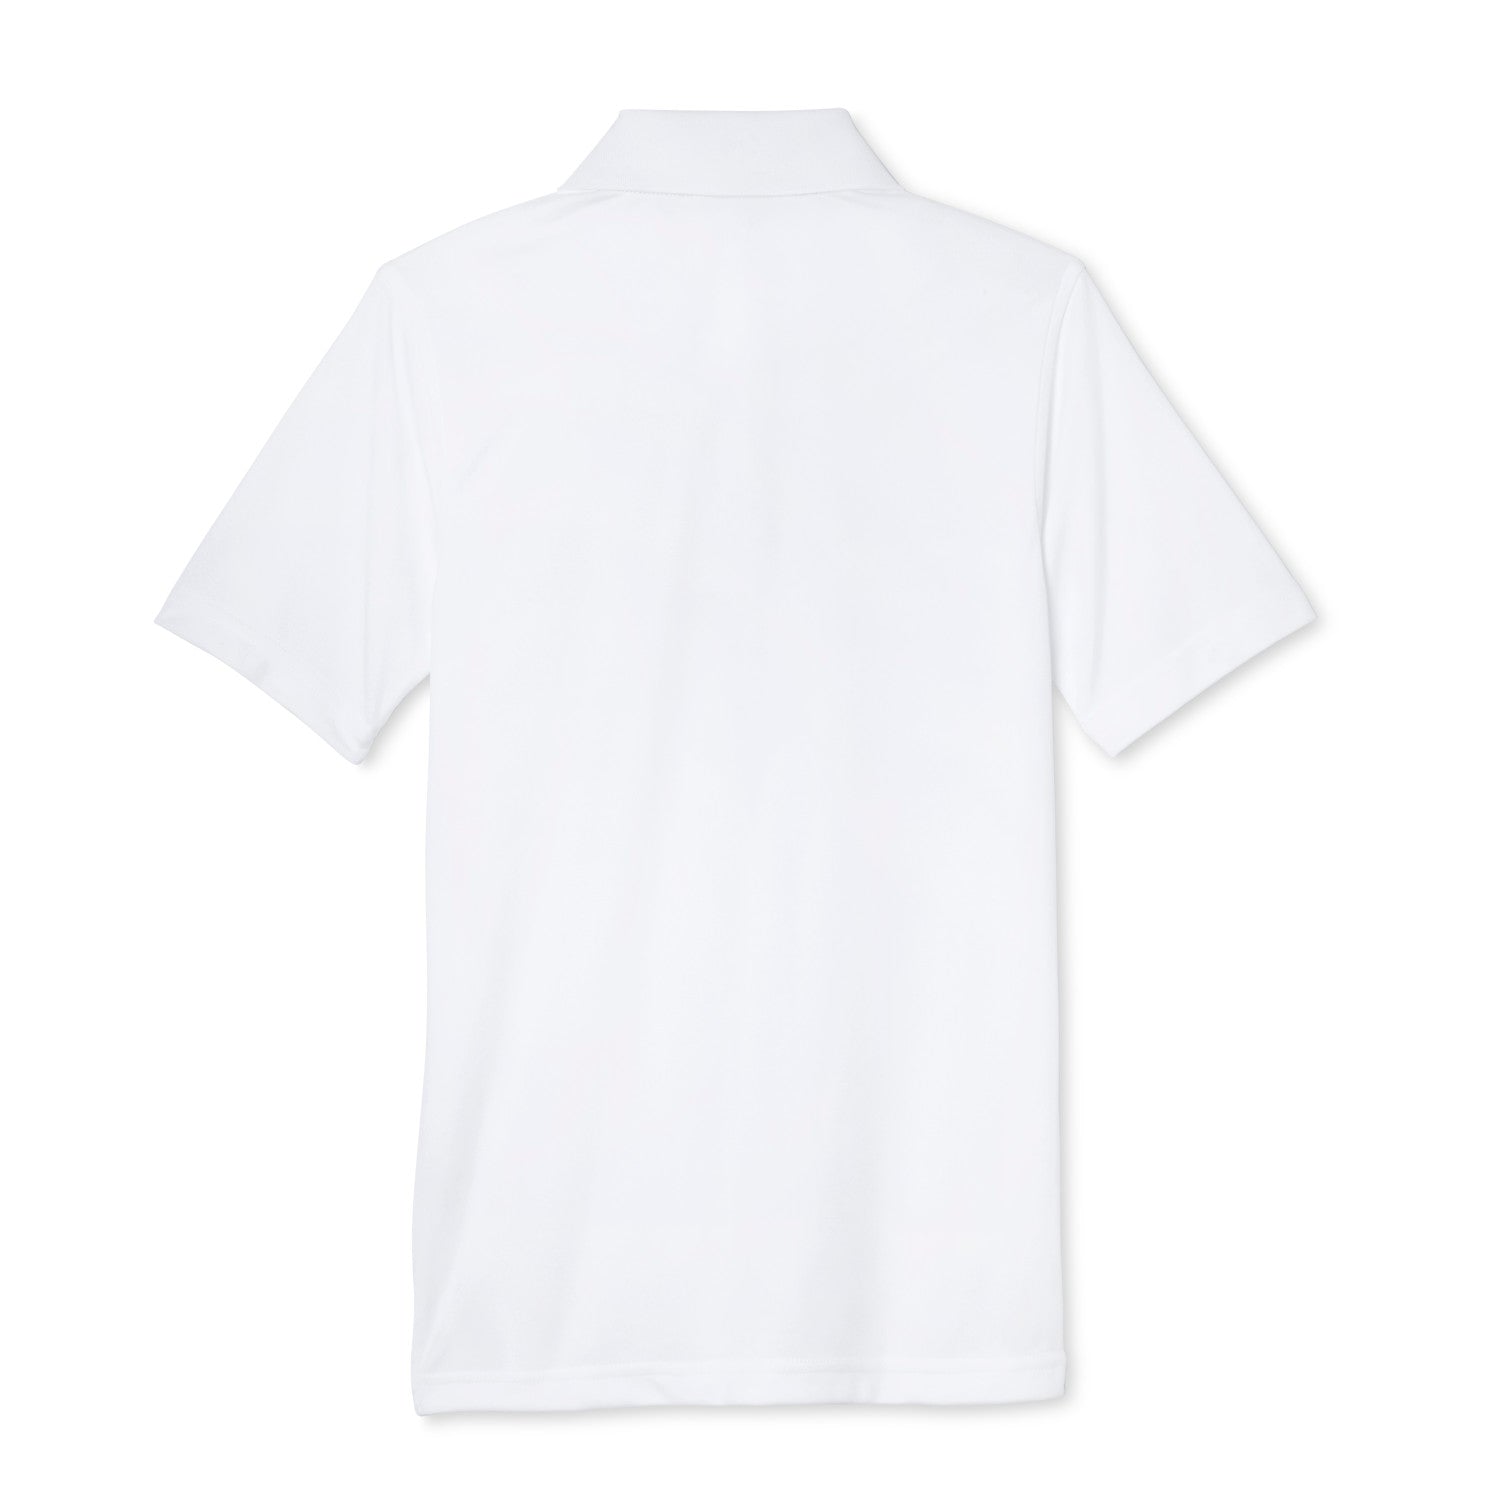 French Toast Boys Short Sleeve Moisture Wicking Stretch Sport Polo Shirt